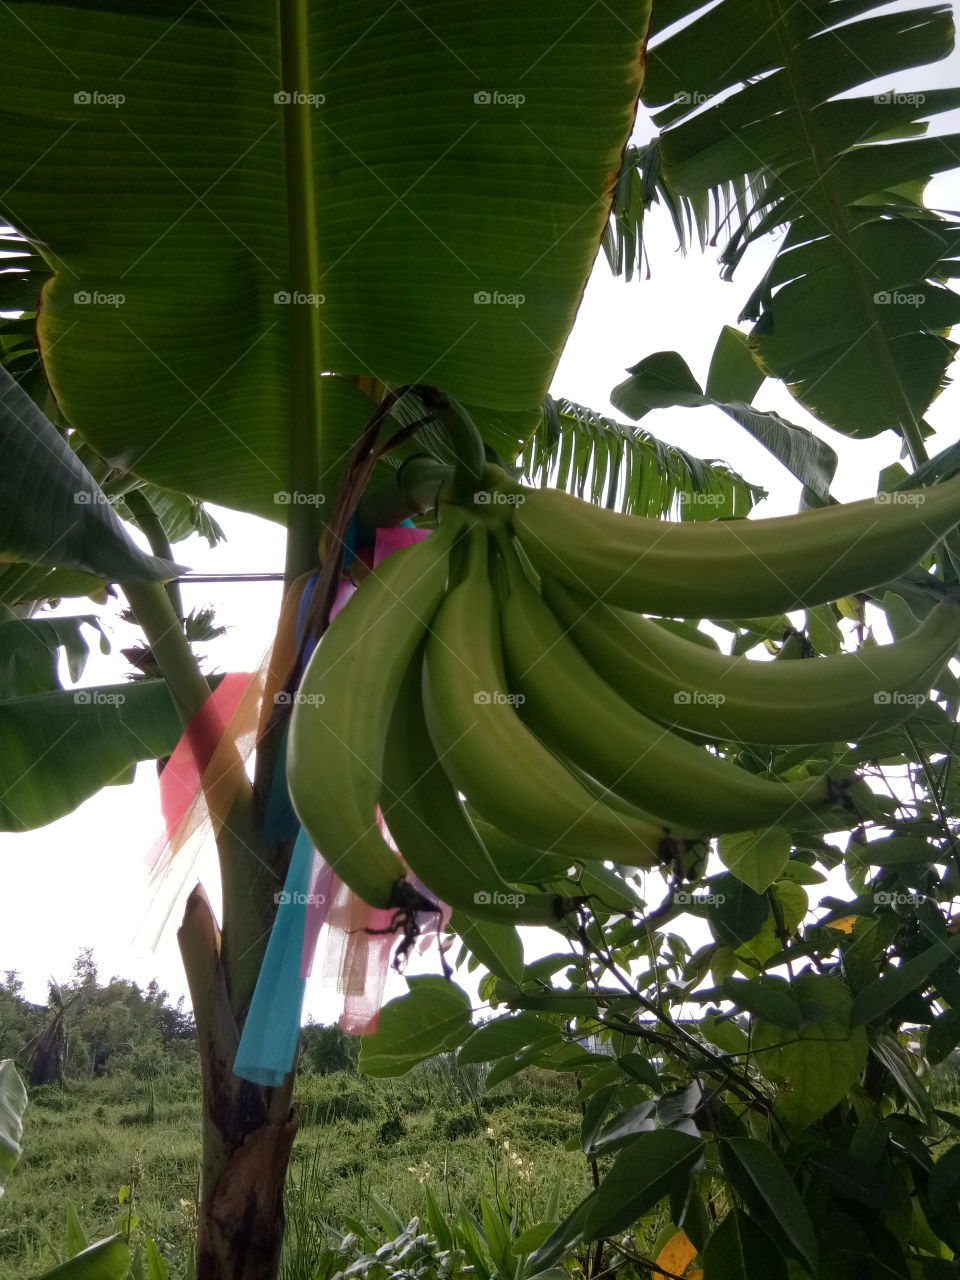 banana
thailand